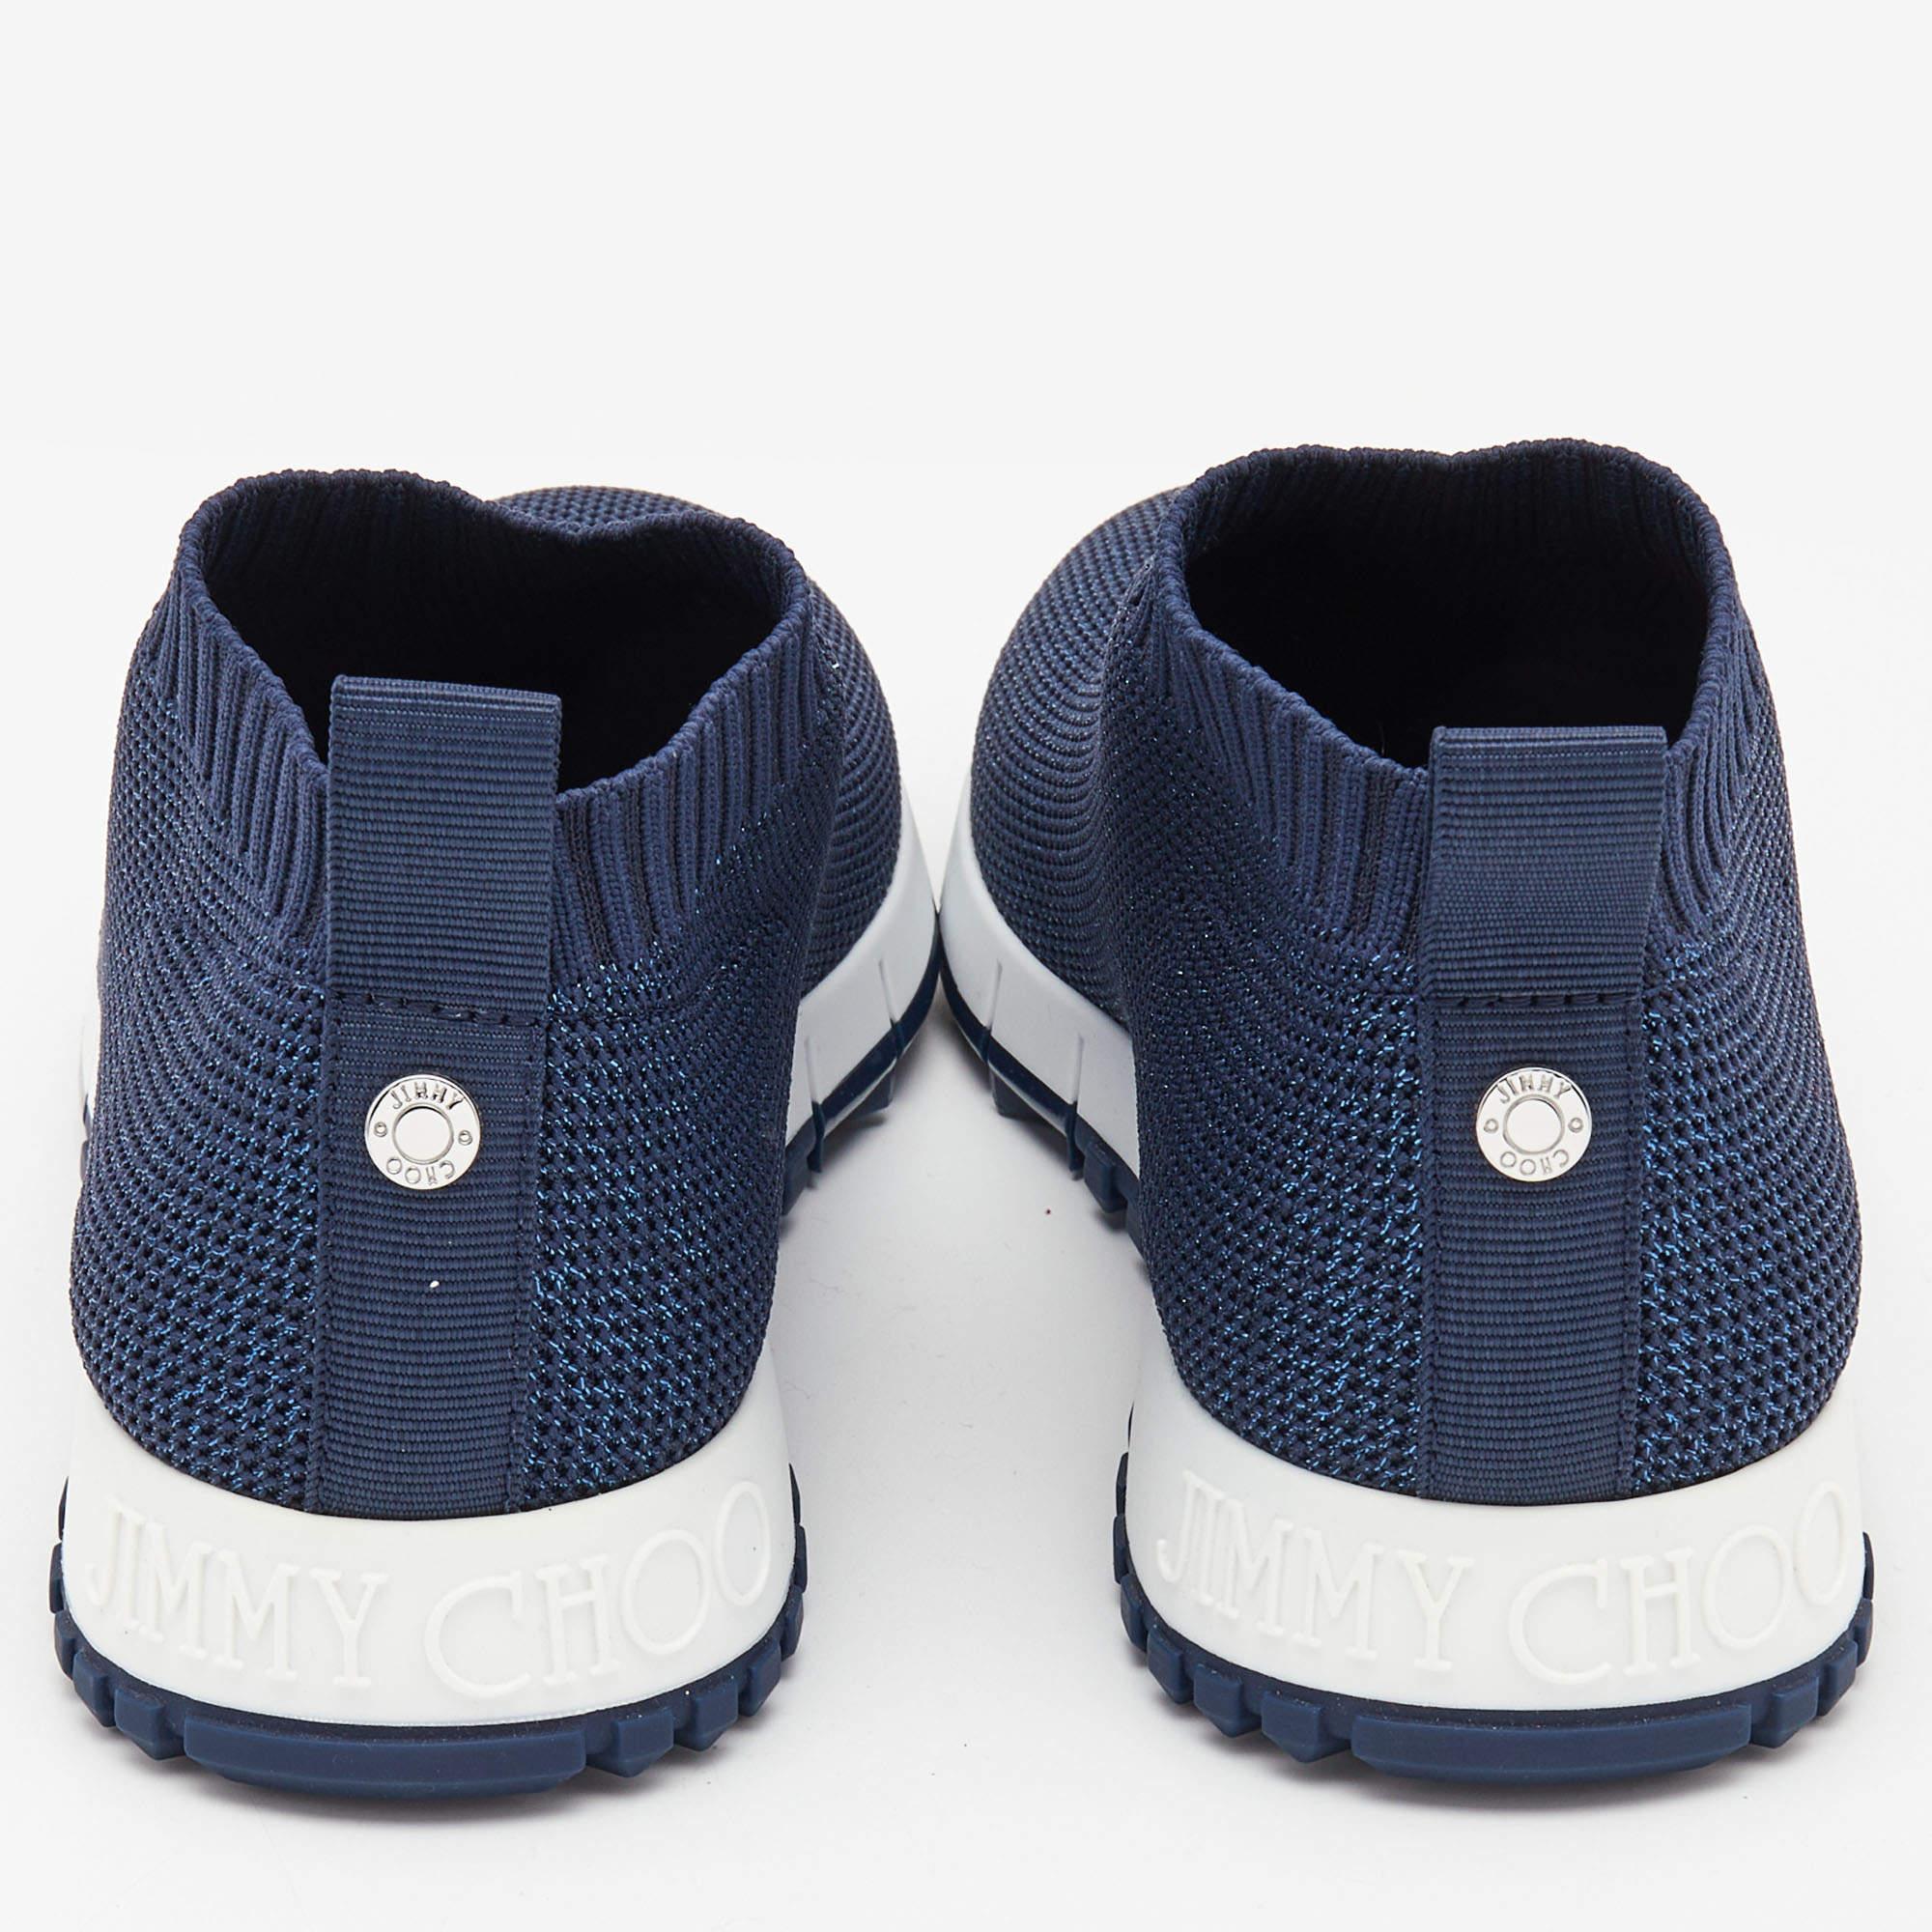 Jimmy Choo Navy Blue Glitter Fabric Low Top Sneakers Size 36.5 3